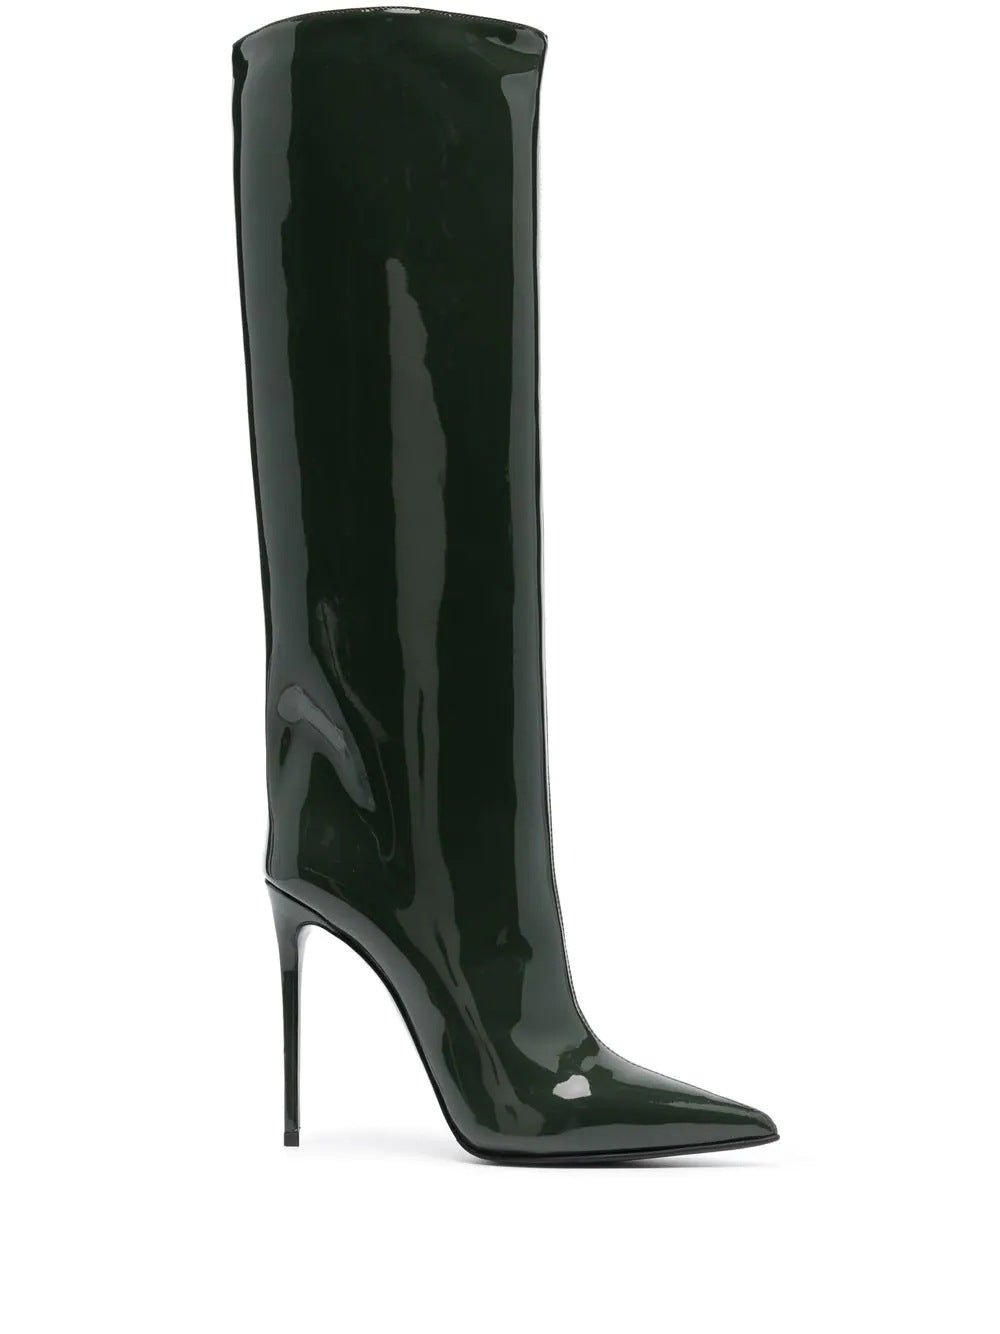 Classic Minimalist Style Stiletto Boots - Kelly Obi New York